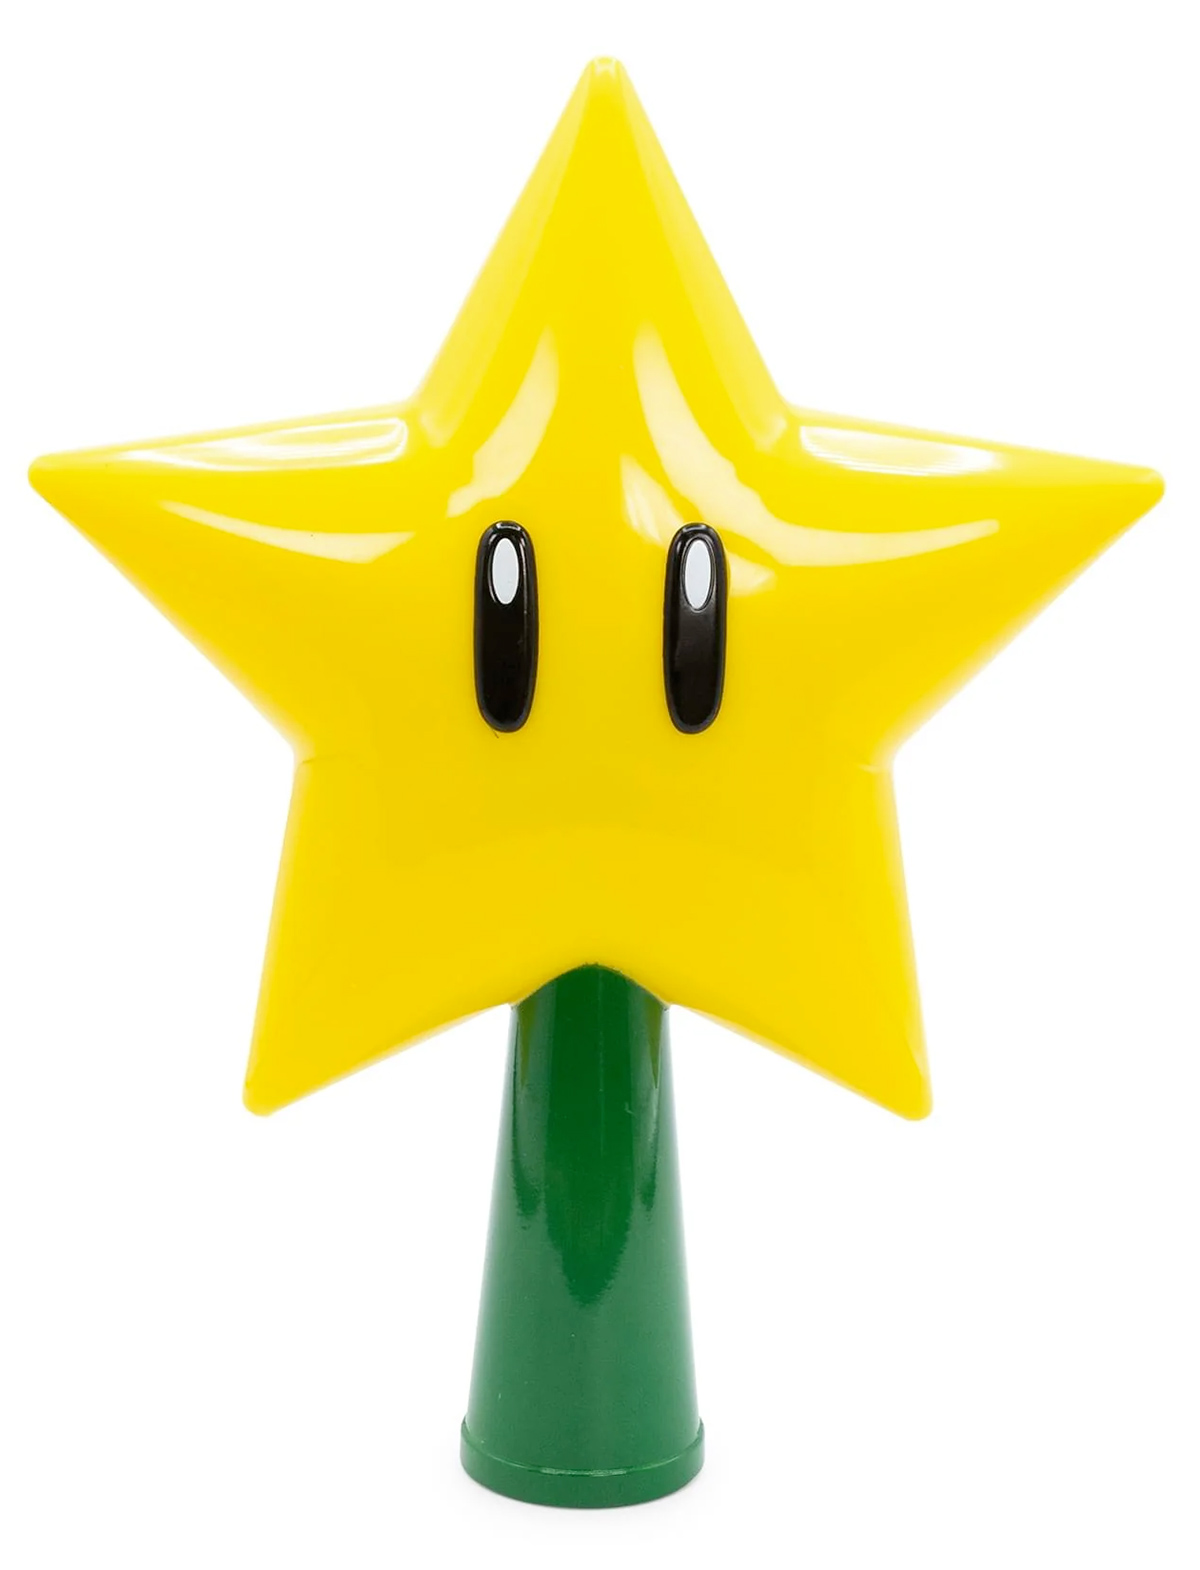 Super Estrela do Super Mario para o Topo da Árvore de Natal